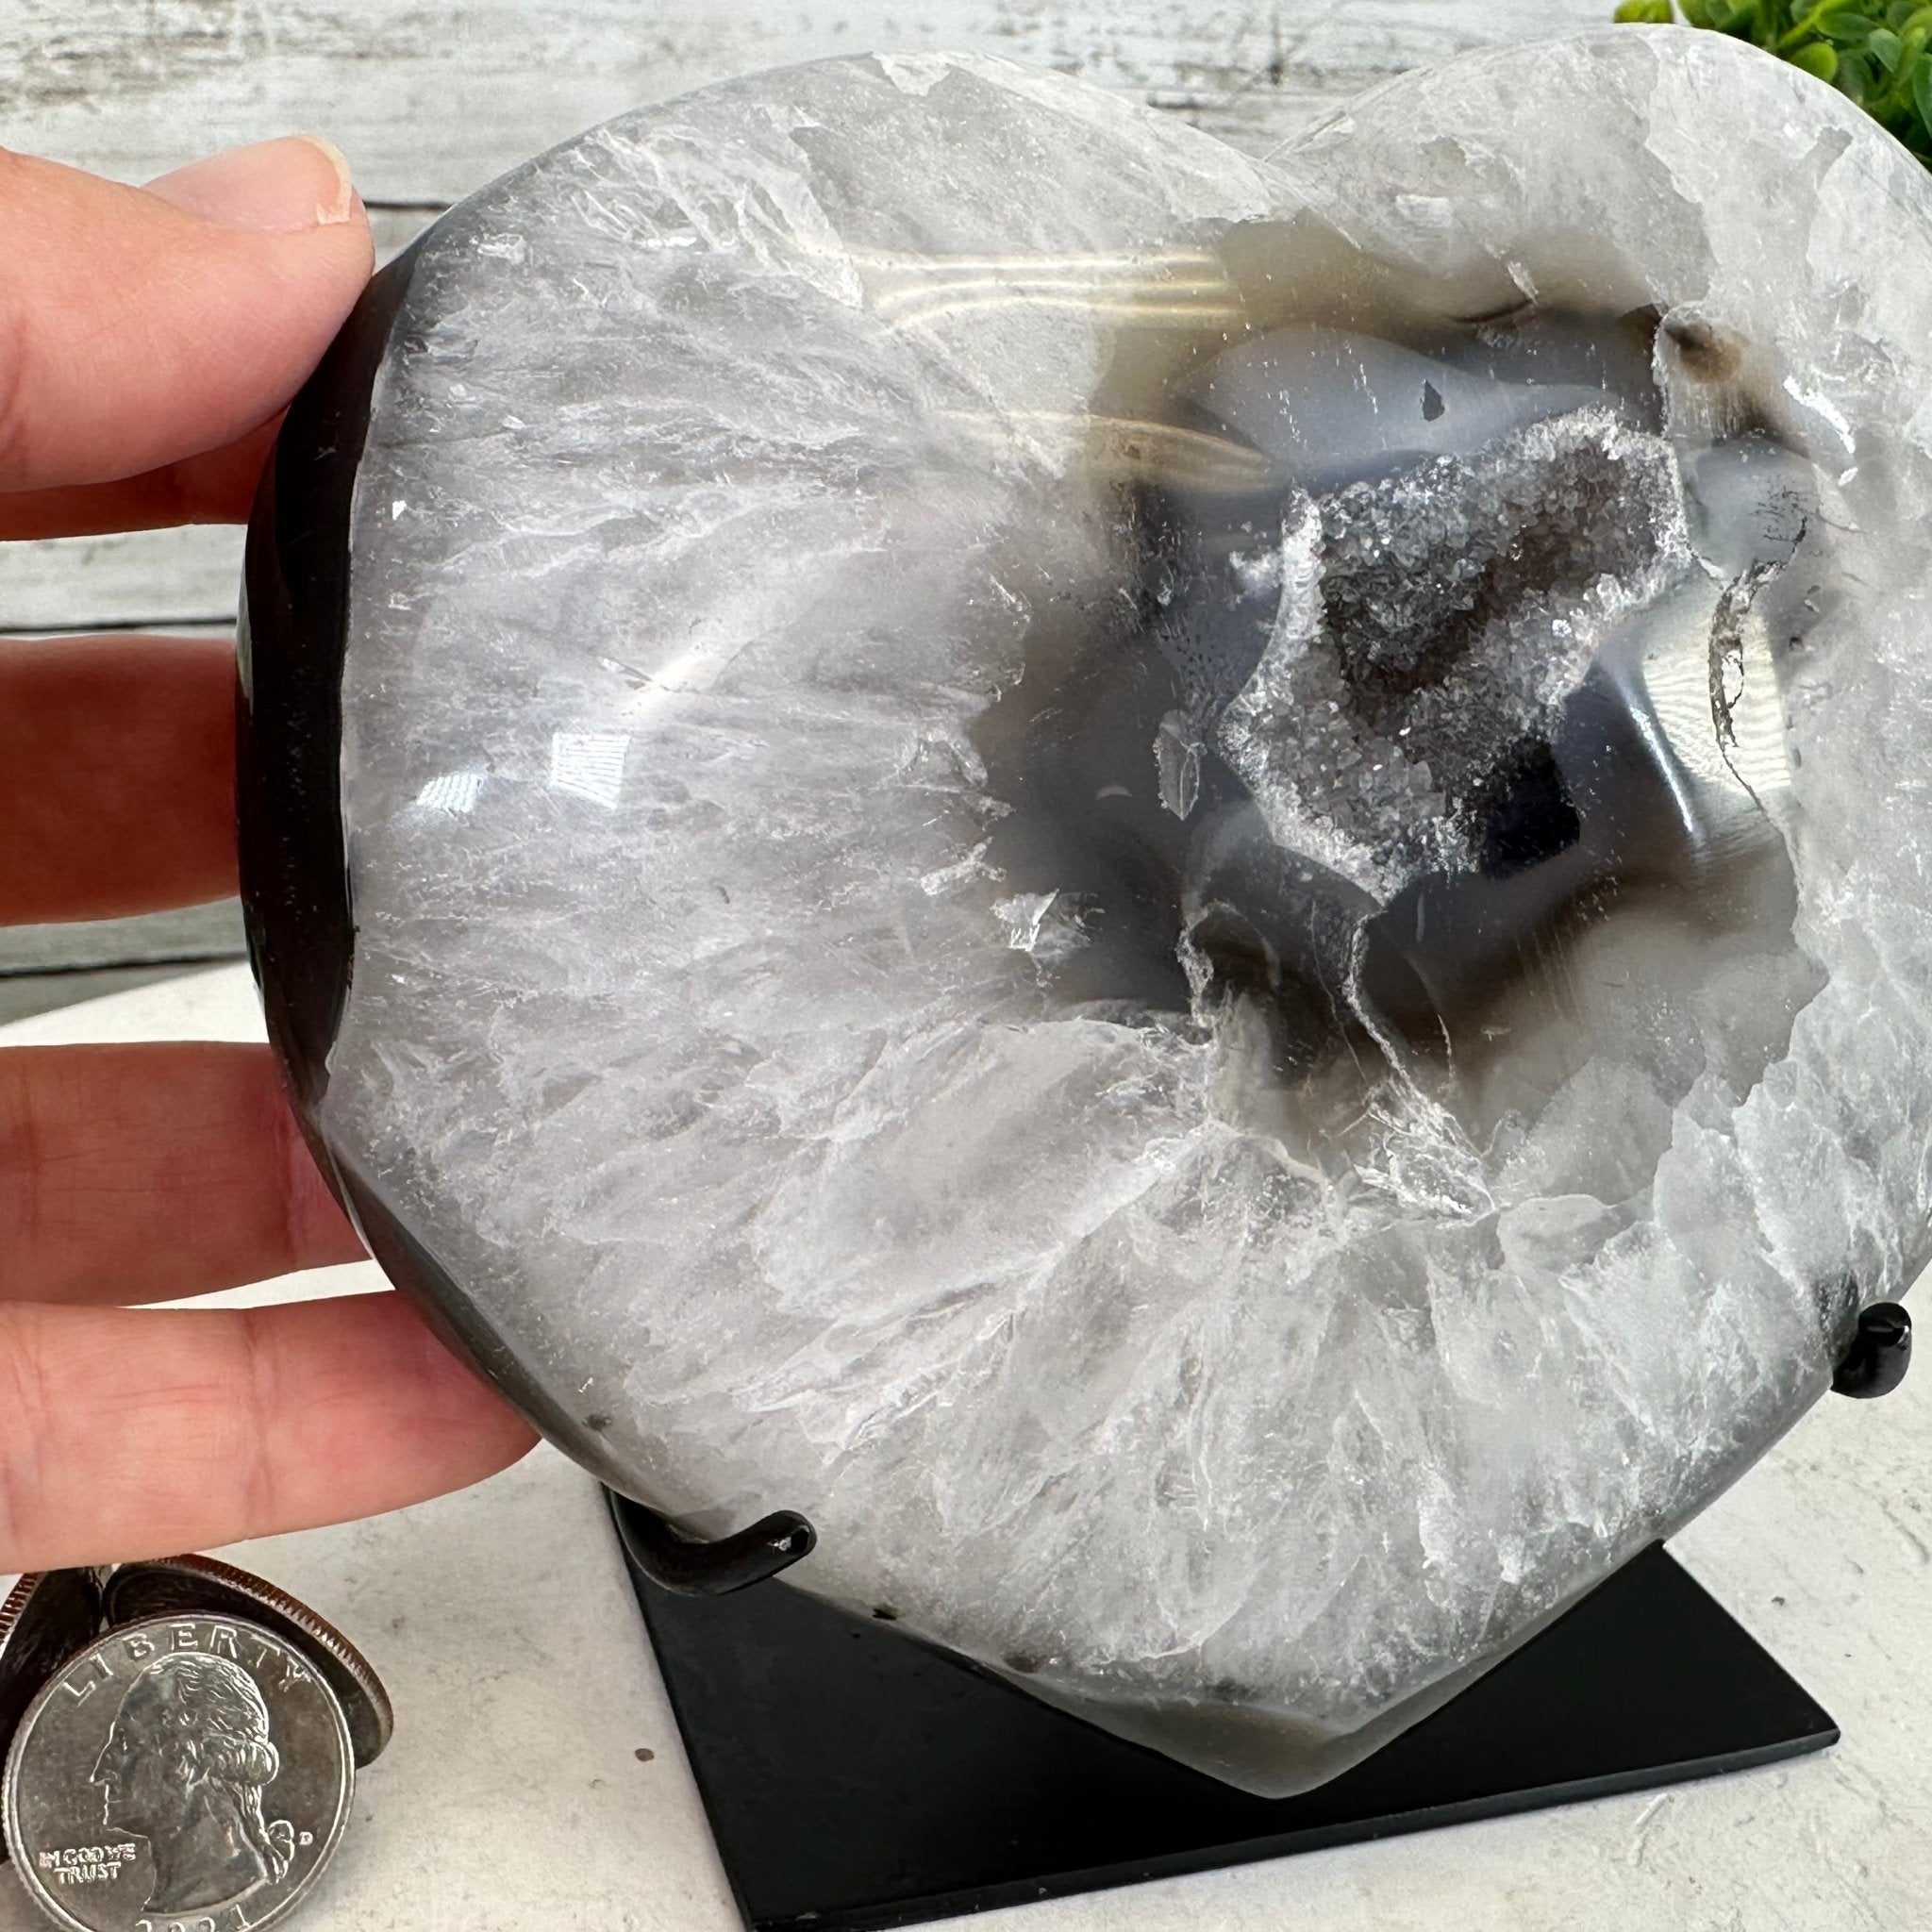 Polished Agate Heart Geode on a Metal Stand, 3.3 lbs & 5" Tall, Model #5468-0042 by Brazil Gems - Brazil GemsBrazil GemsPolished Agate Heart Geode on a Metal Stand, 3.3 lbs & 5" Tall, Model #5468-0042 by Brazil GemsHearts5468-0042